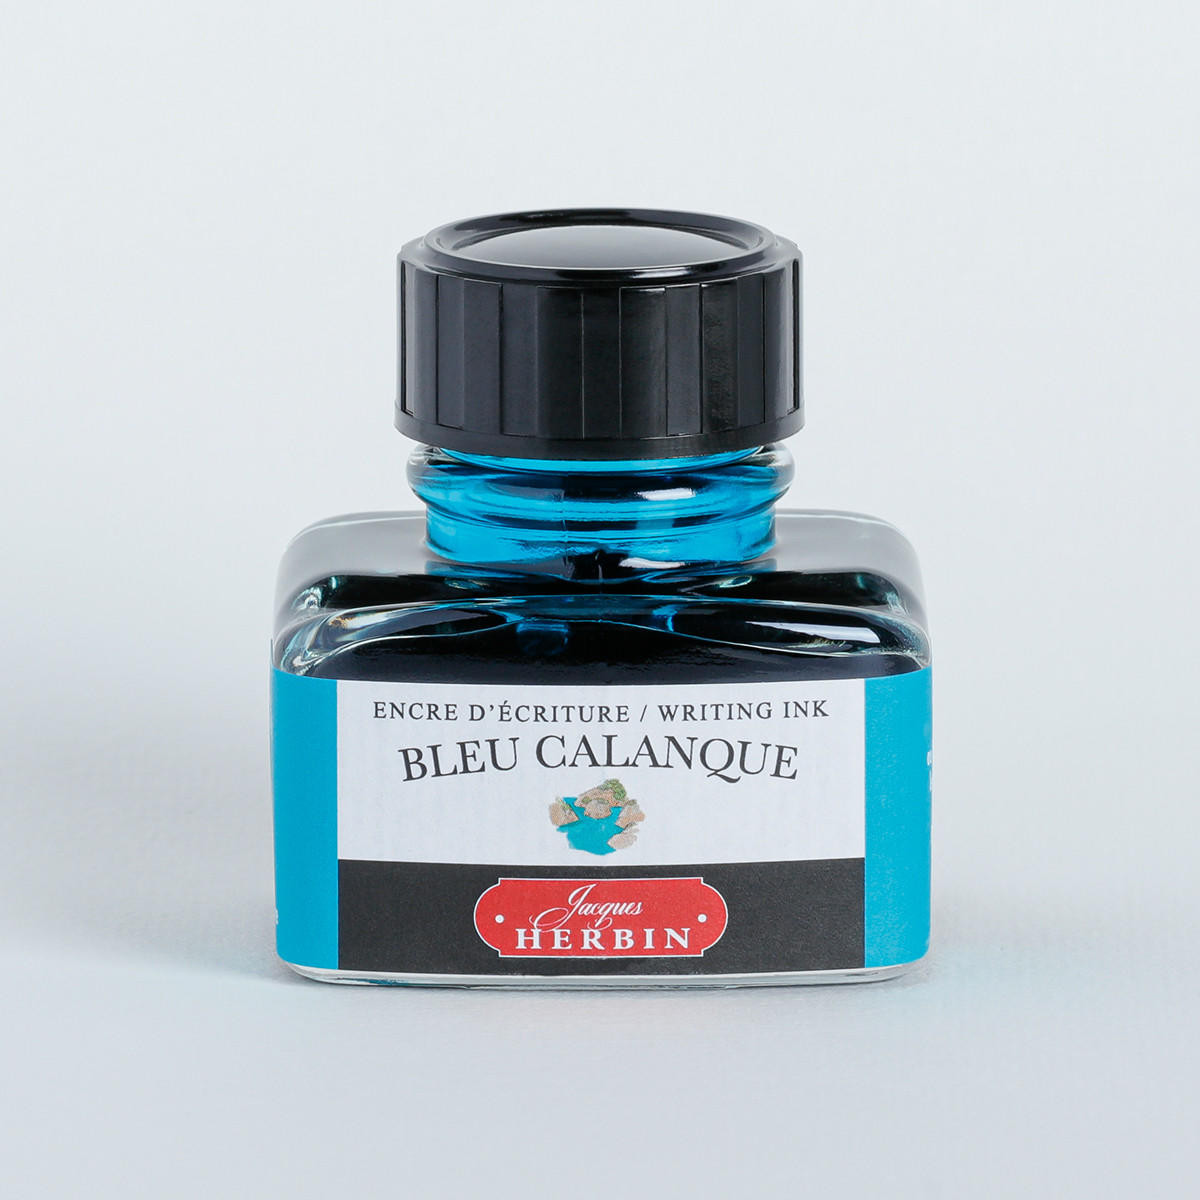 Herbin ’D’ Writing and Drawing Ink 30ml Bleu Calanque